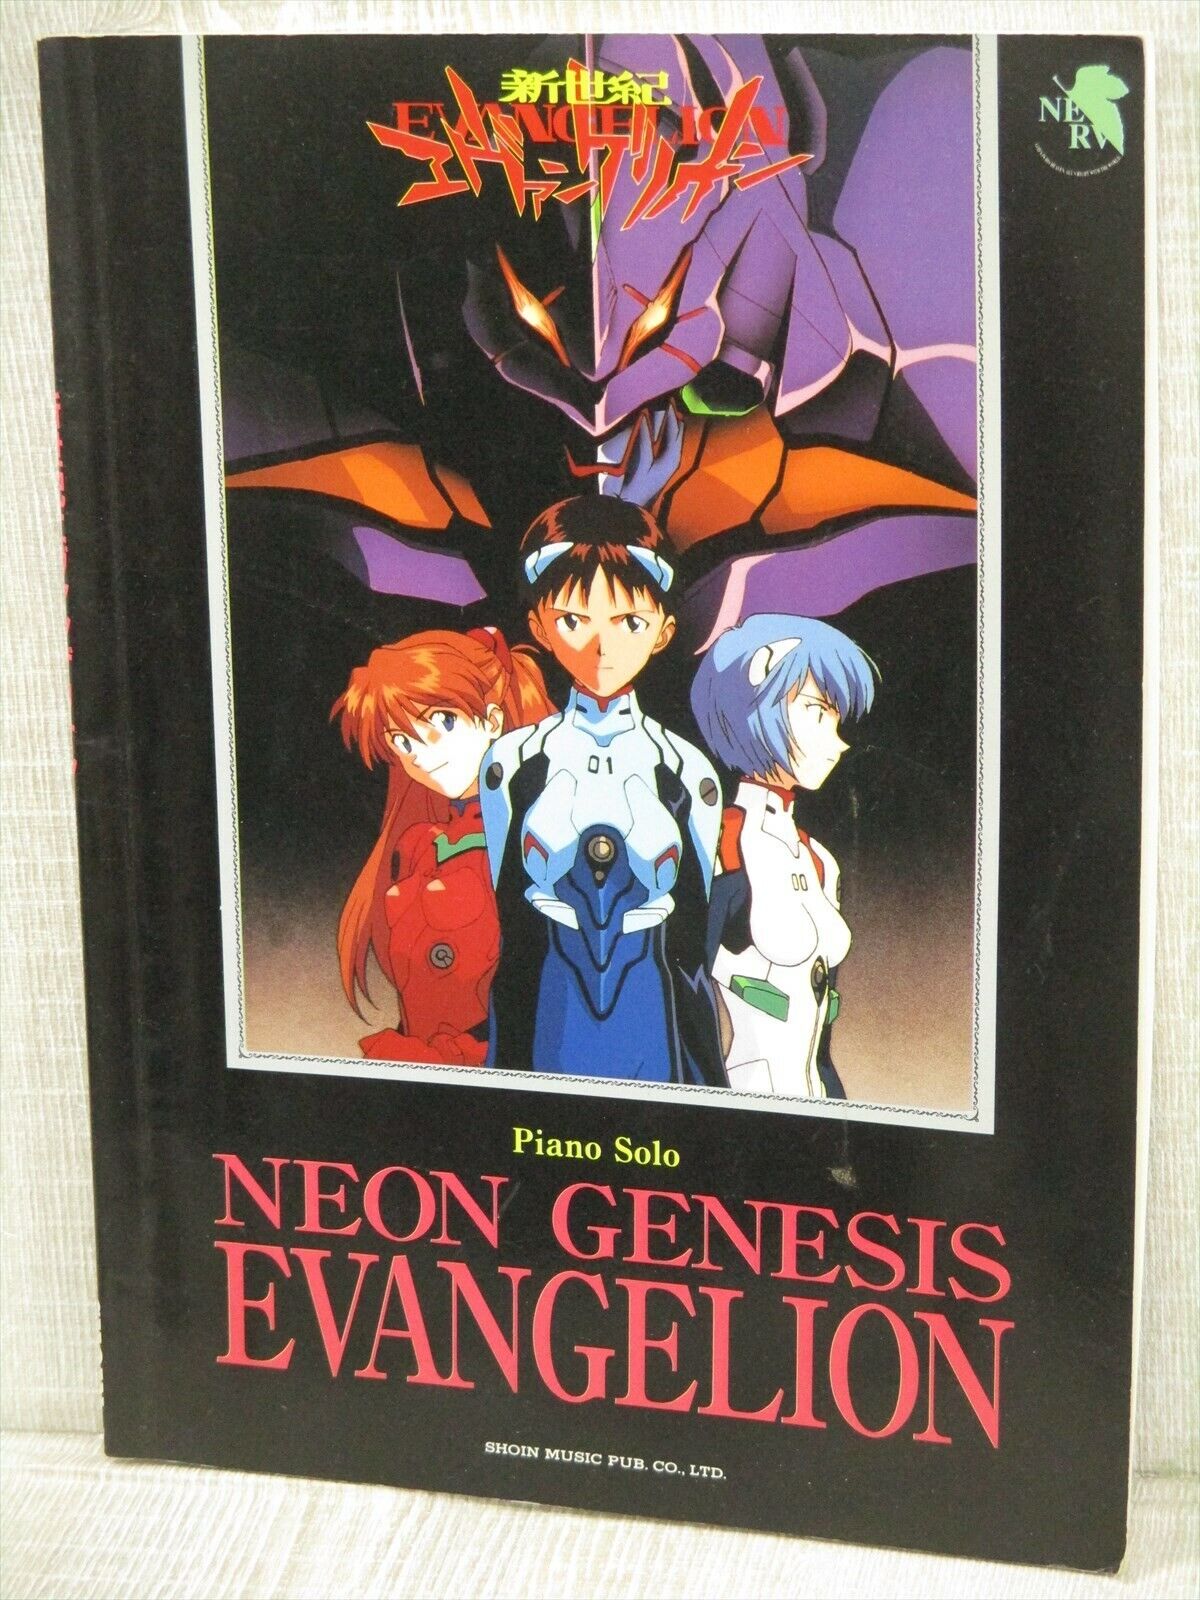 EVANGELION Neon Genesis Piano Solo Score Art 1997 Music Book Japan 41*